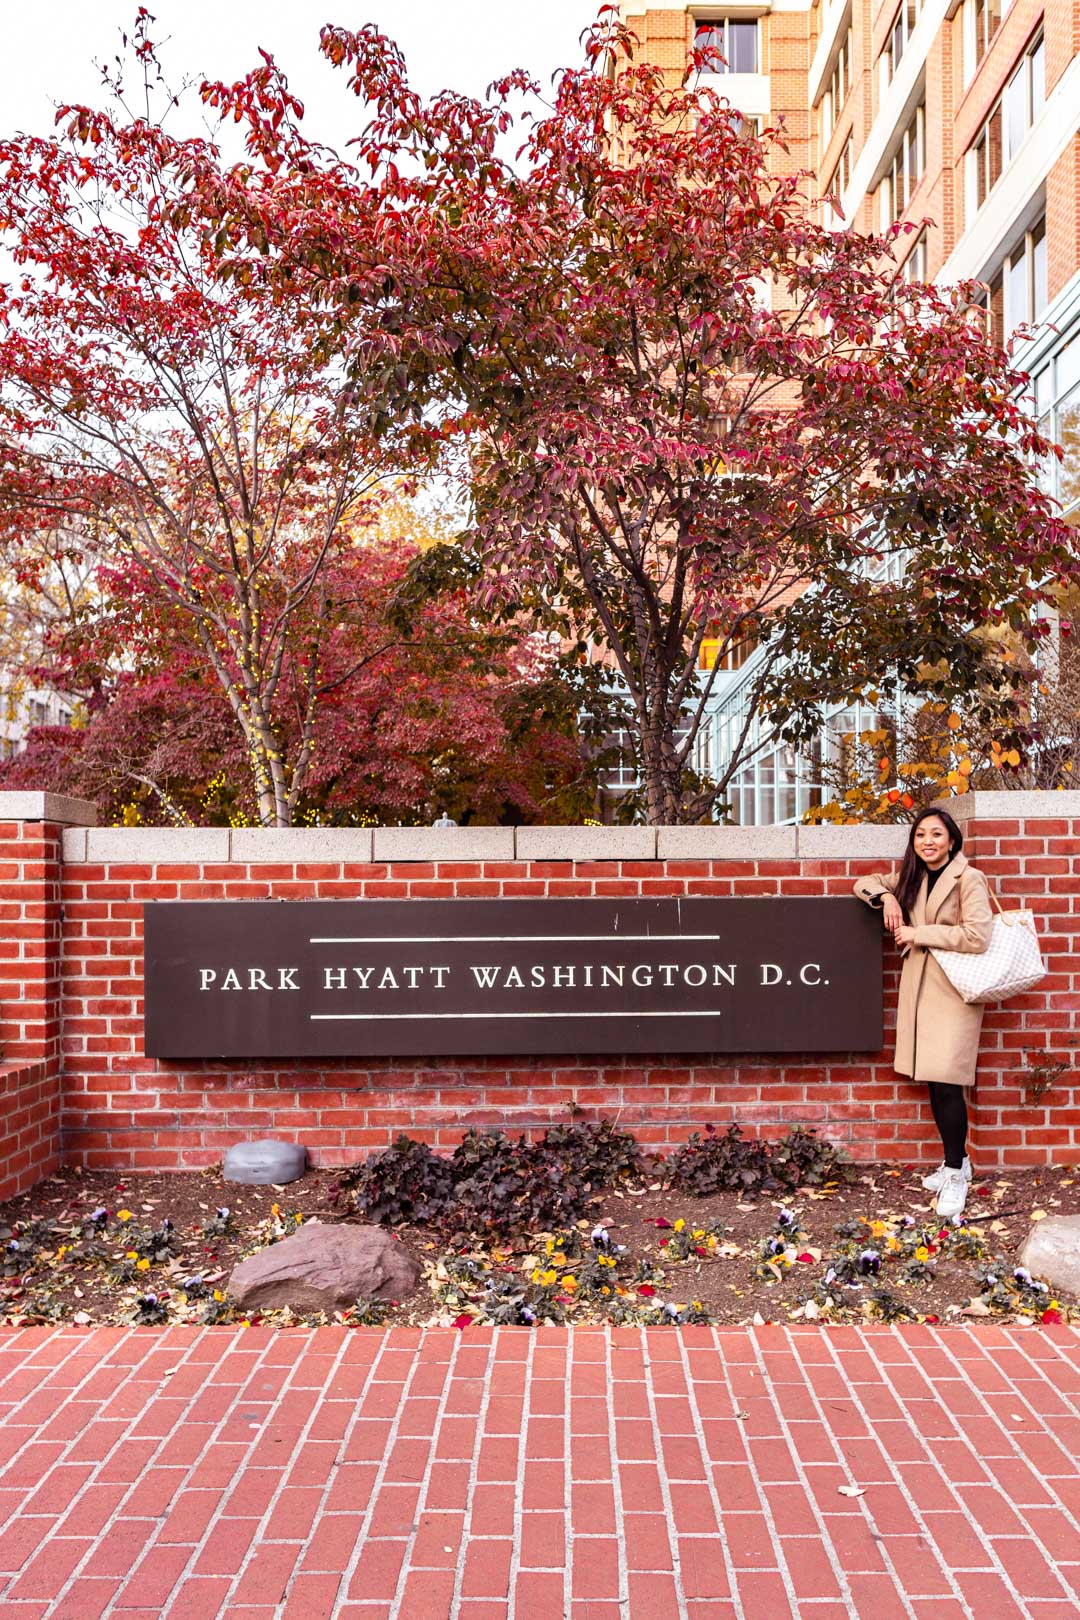 Park Hyatt Washington D.C.